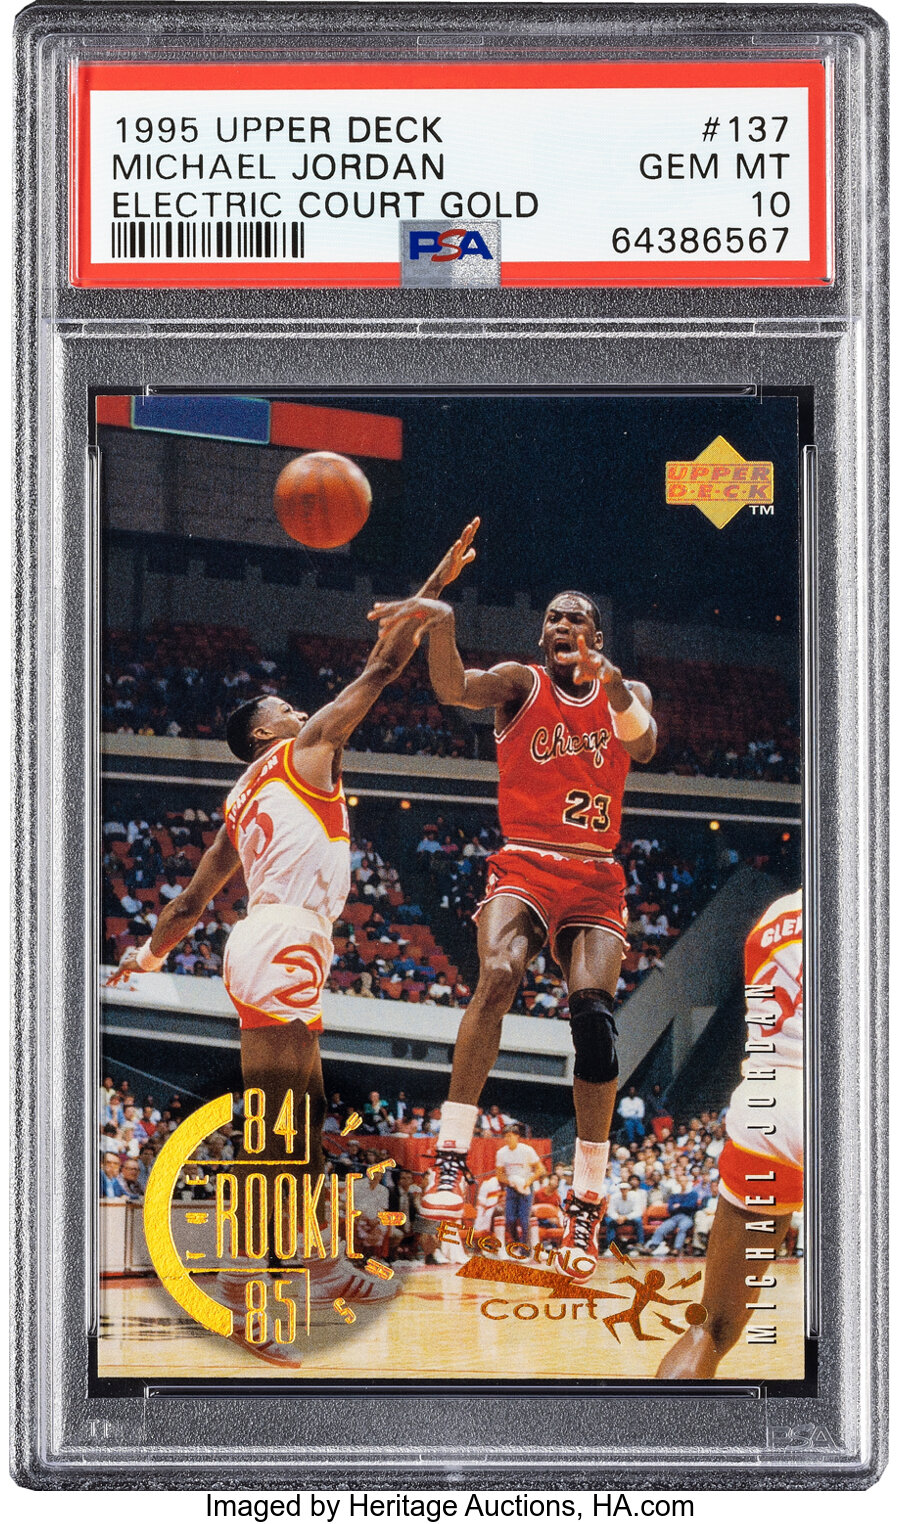 1995 Upper Deck Michael Jordan (Electric Court Gold) #137 PSA Gem Mint 10